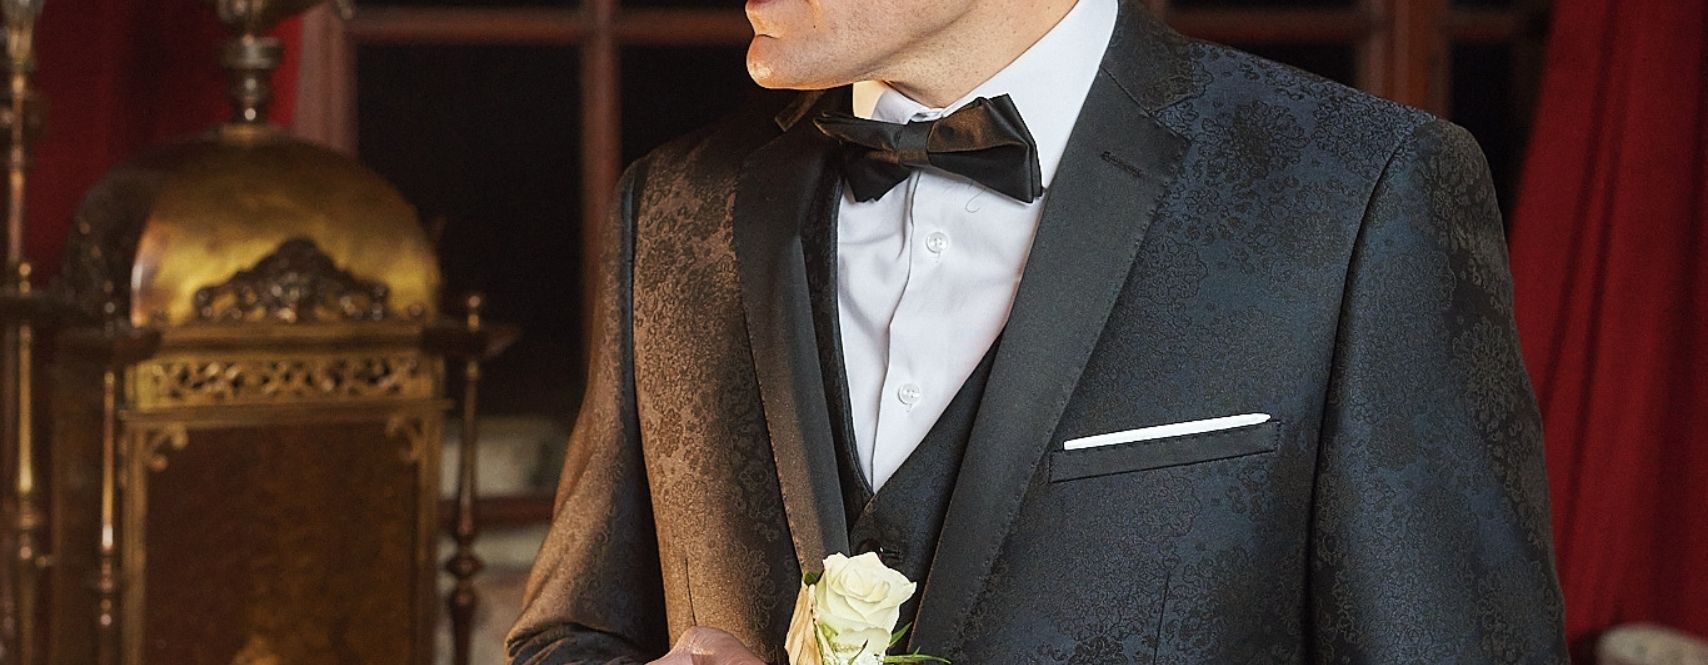 Wedding suit Besançon, ceremony suit, custom made, personalization, Hafnium